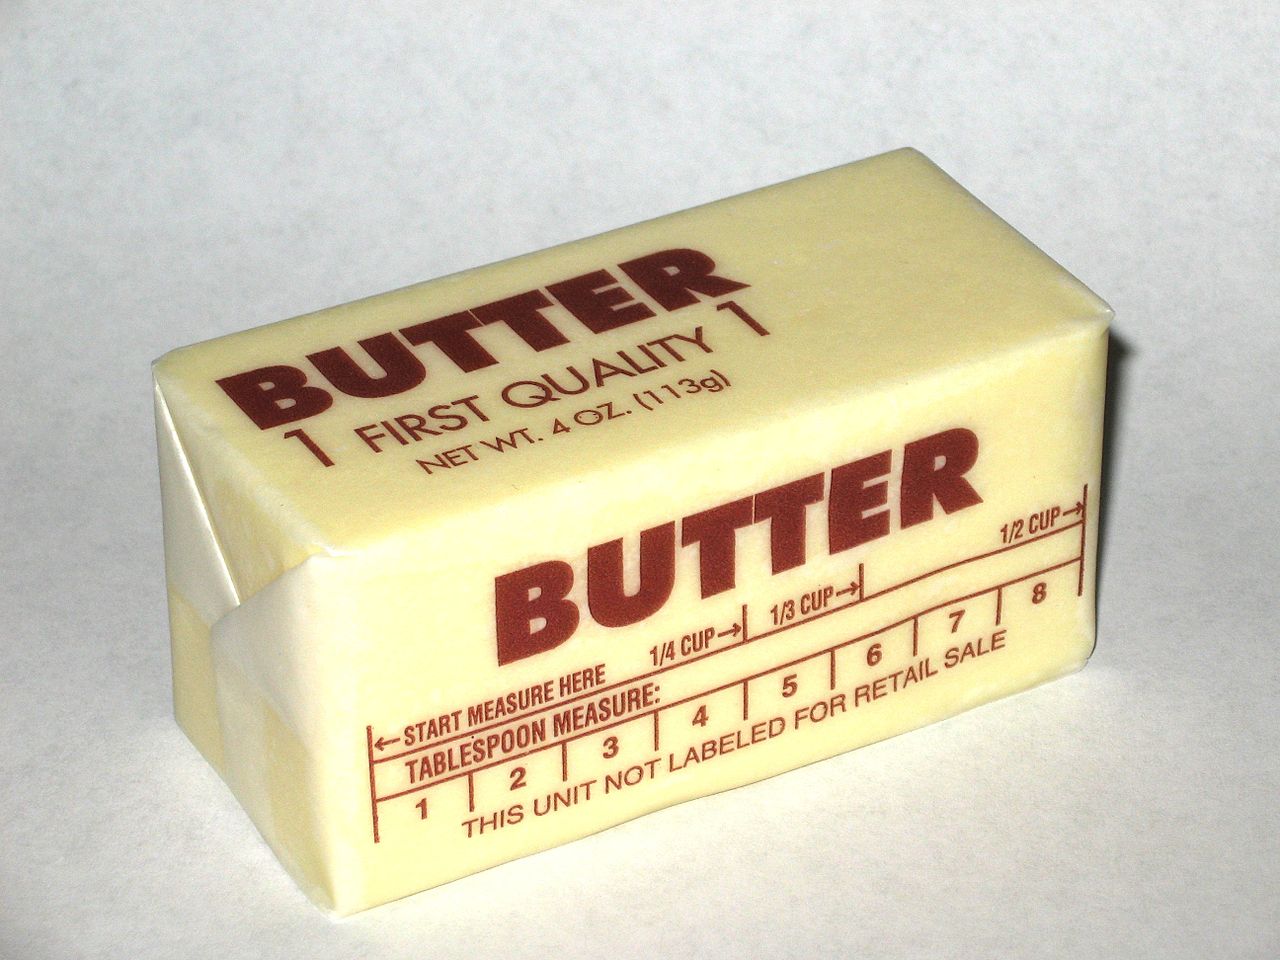 1280px-Western-pack-butter.jpg